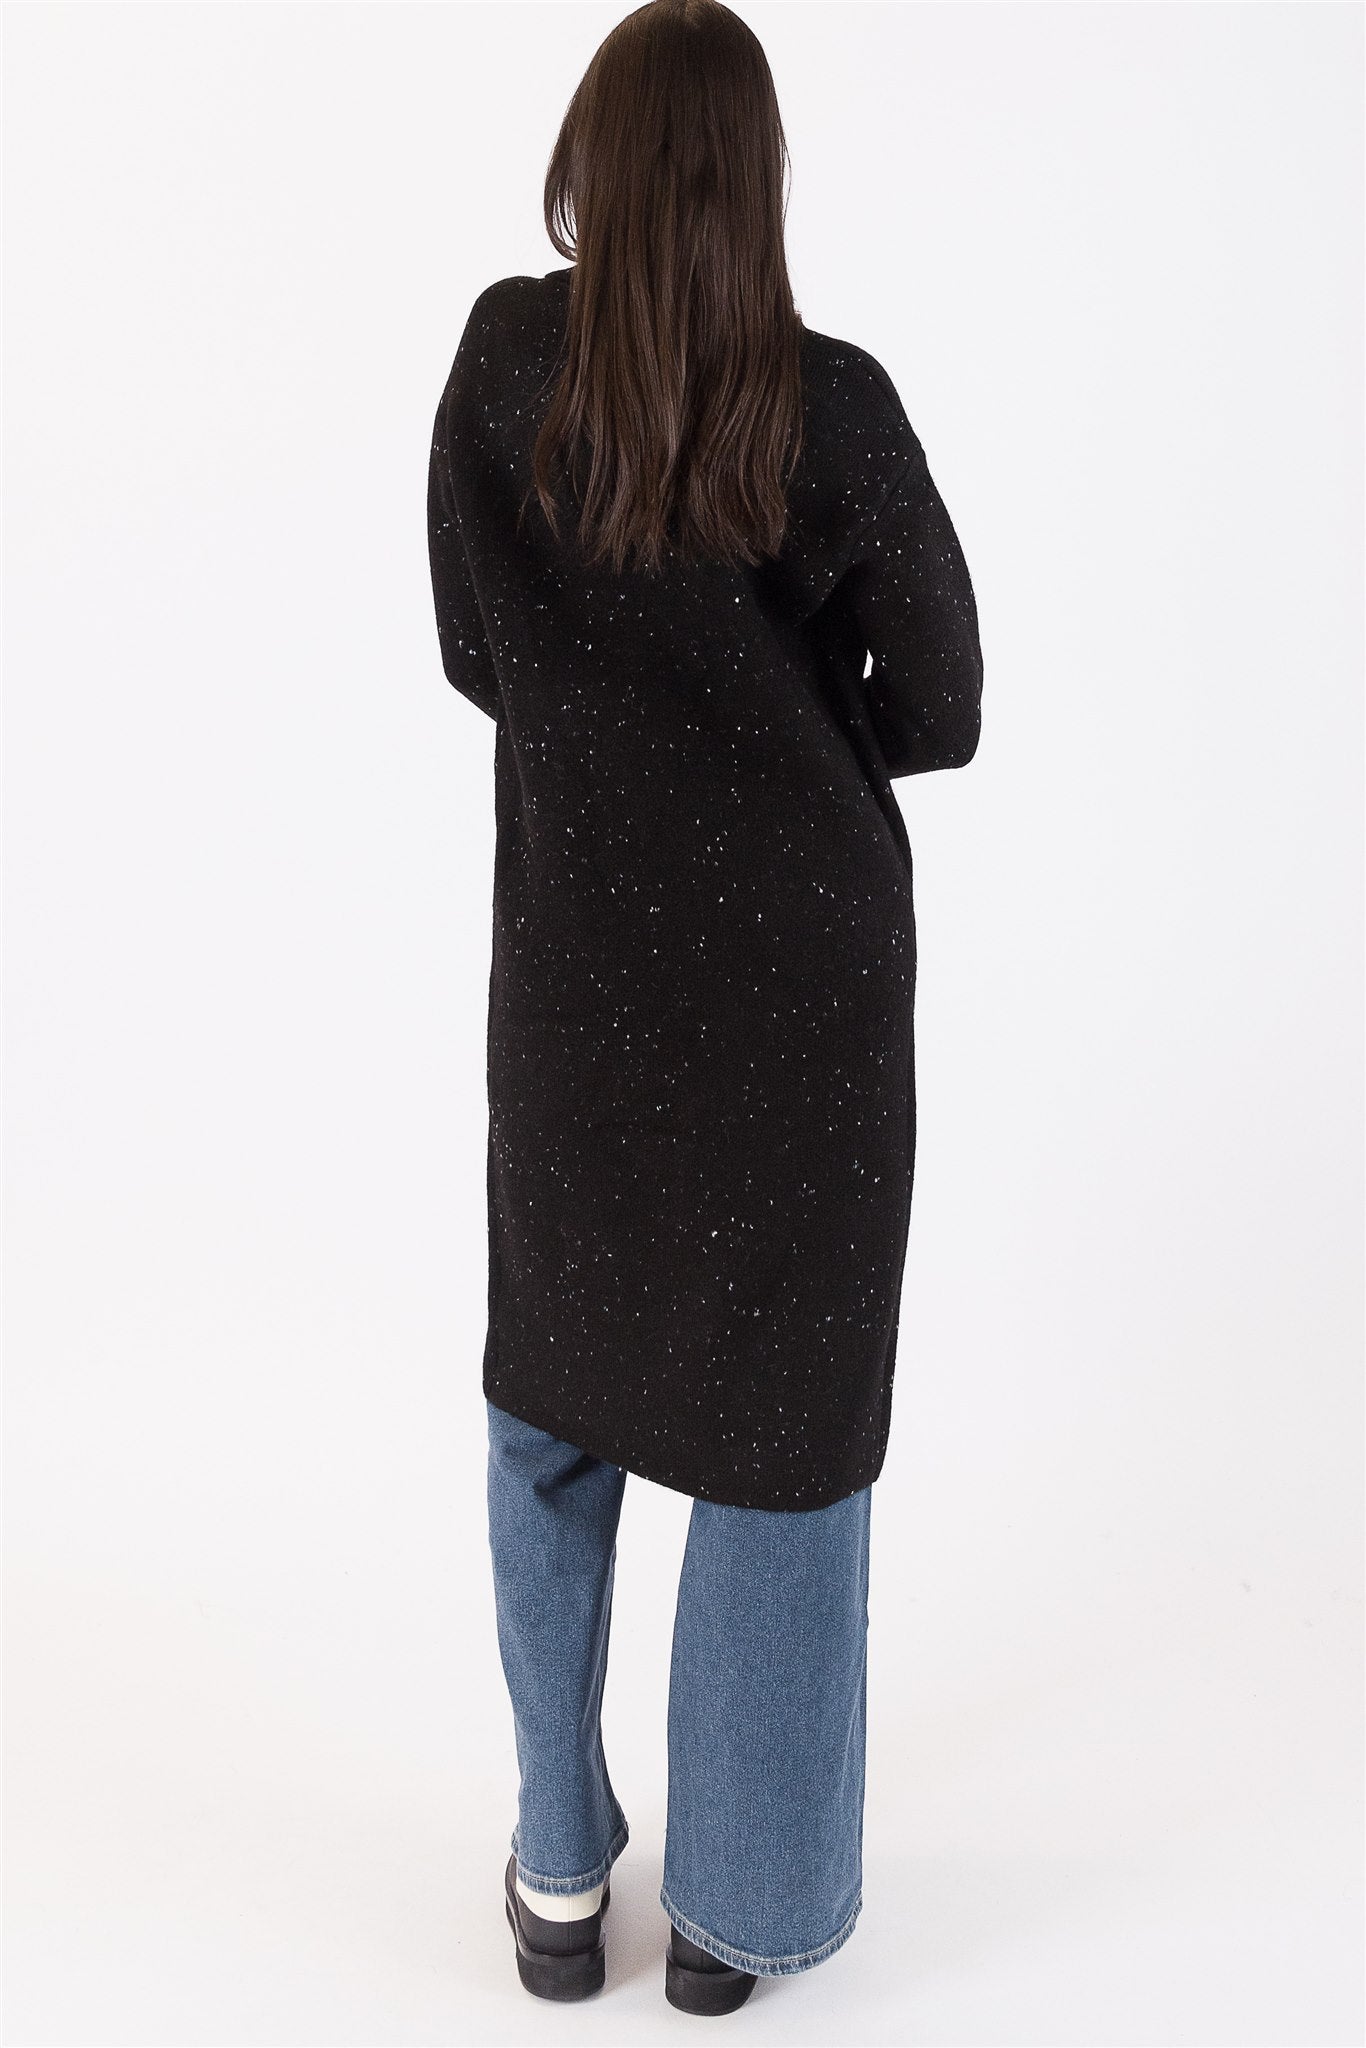 Jimmi Sweater Coat |  Black Fleck